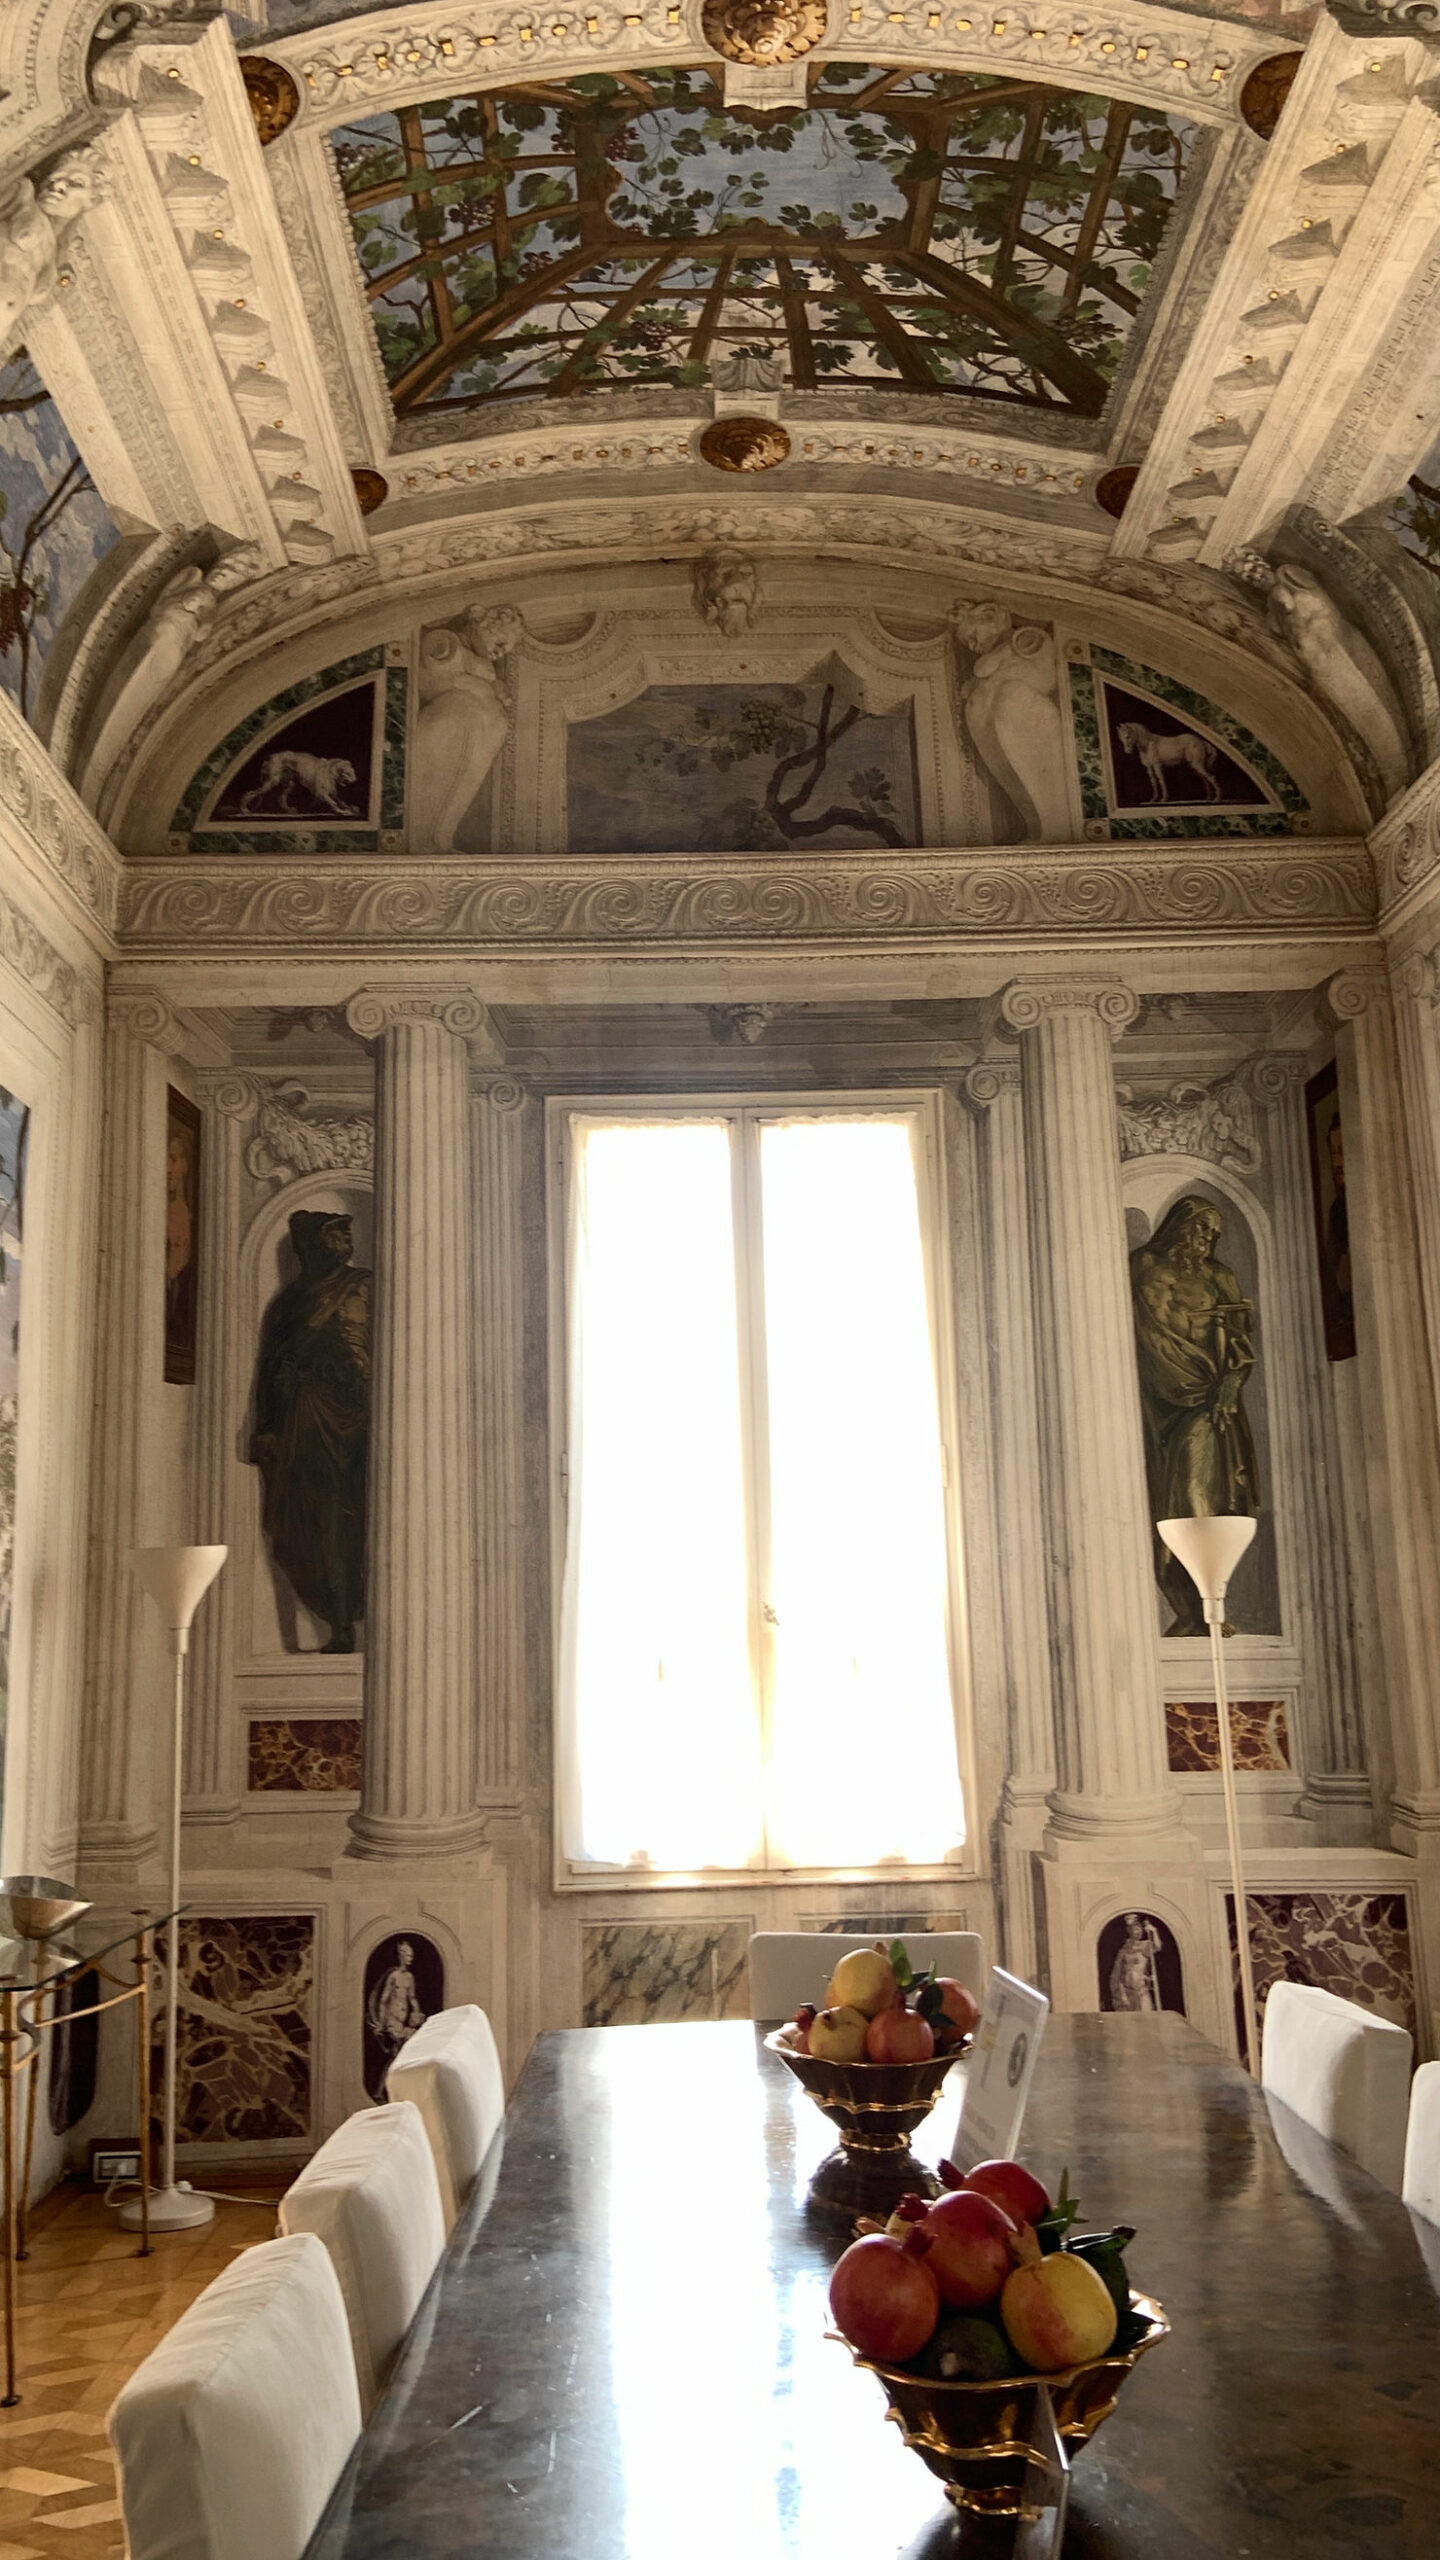 Paolo Veronese, affreschi della villa Barbaro a Maser (Treviso)